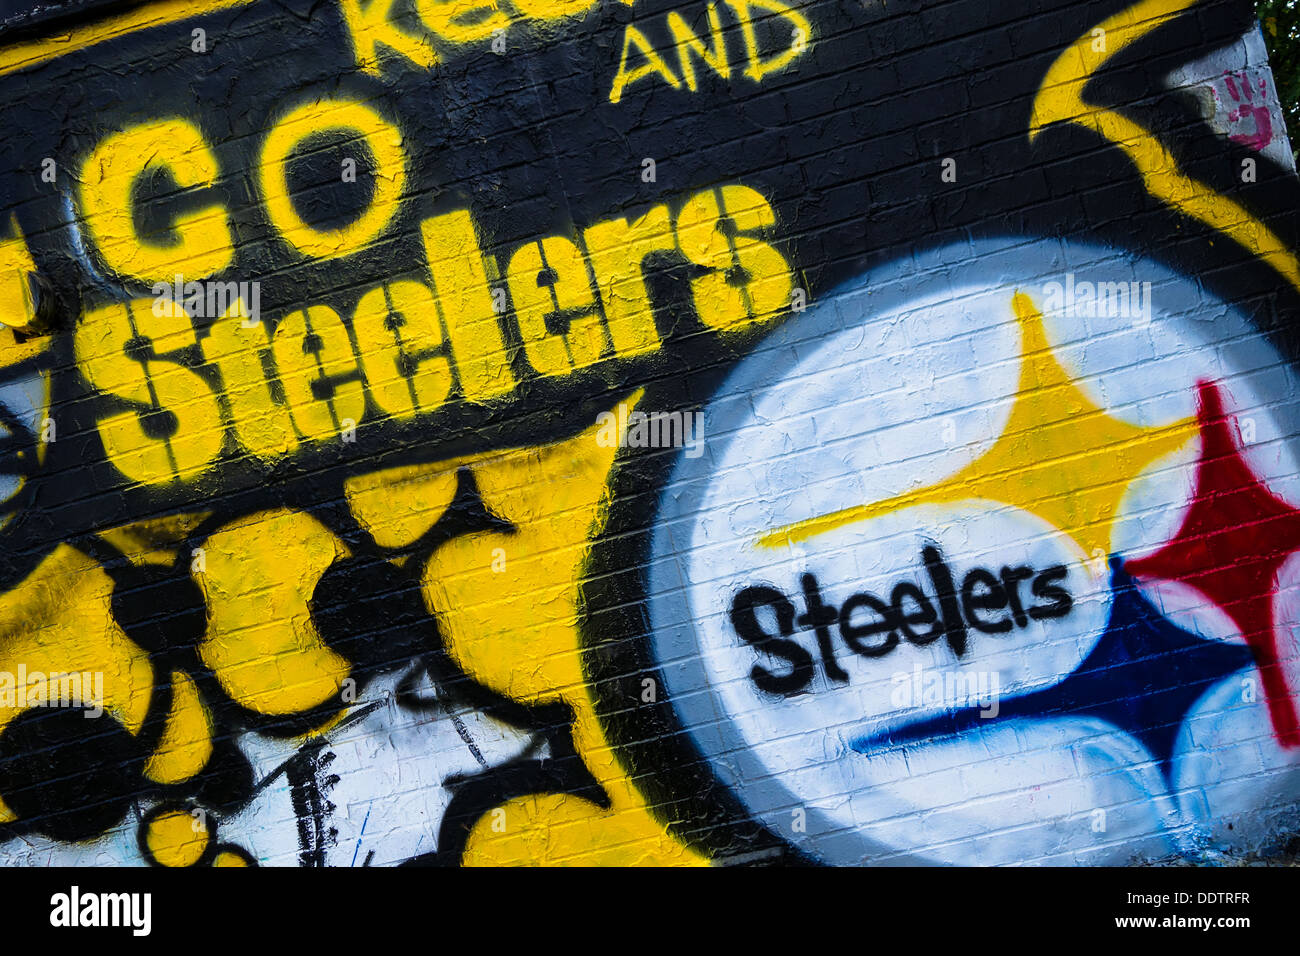 pittsburgh steelers wallpapers - Google Search  Pittsburgh steelers logo, Pittsburgh  steelers wallpaper, Steelers